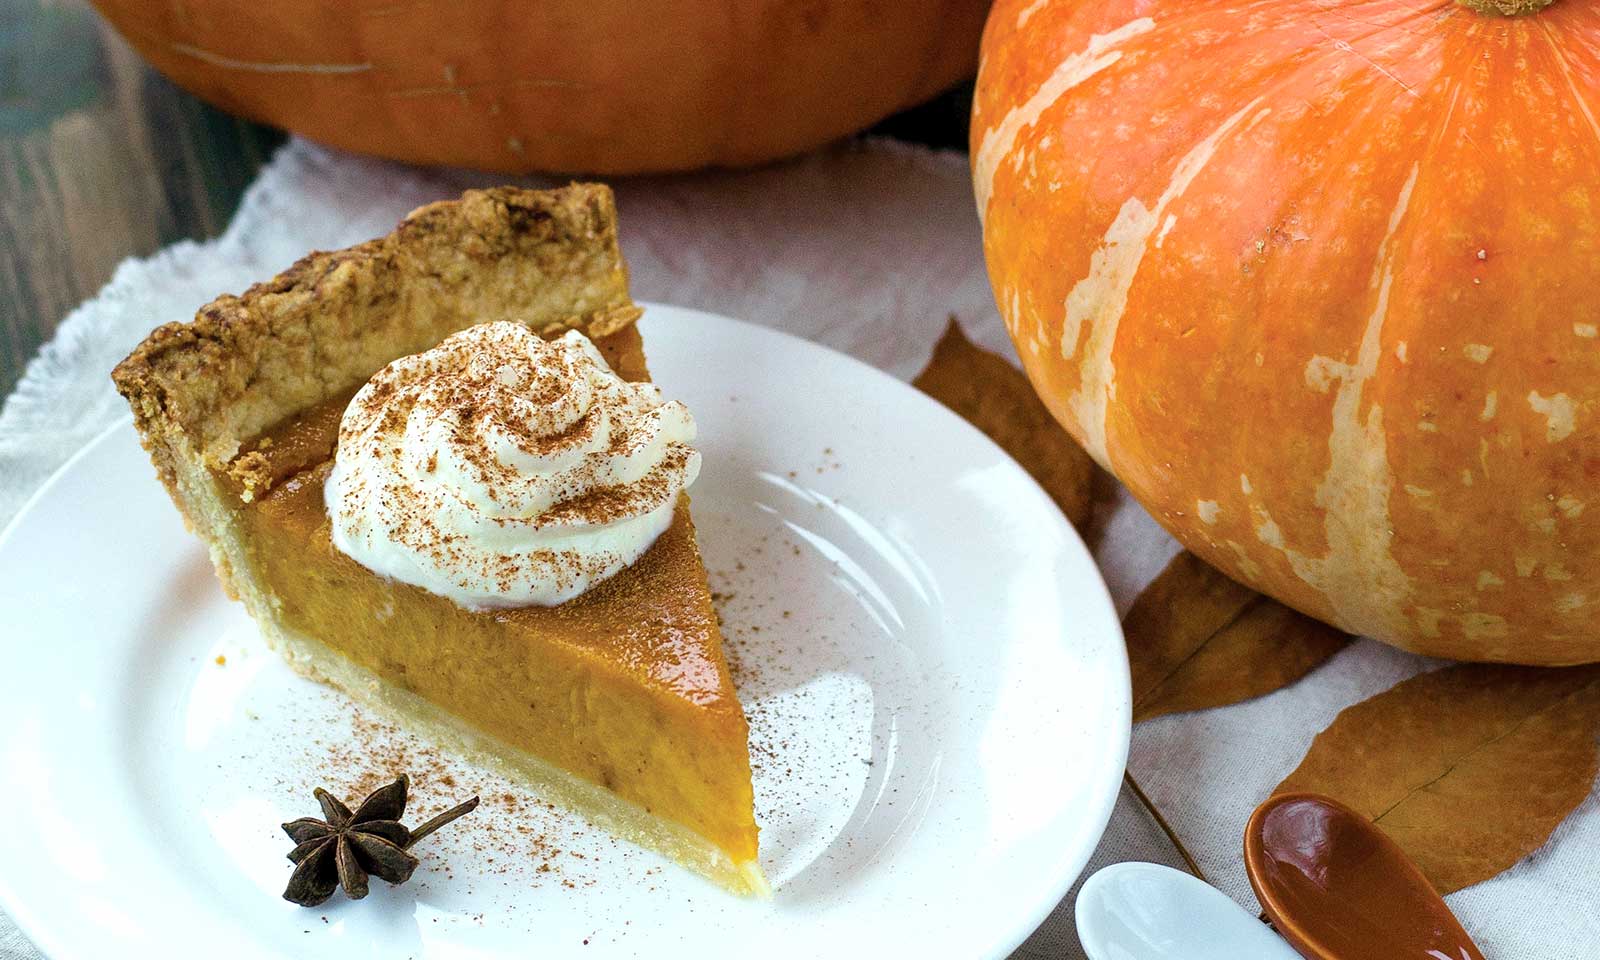 Seasonal Cannabis Cooking: A Cannabis-Infused Pumpkin Pie for Fall